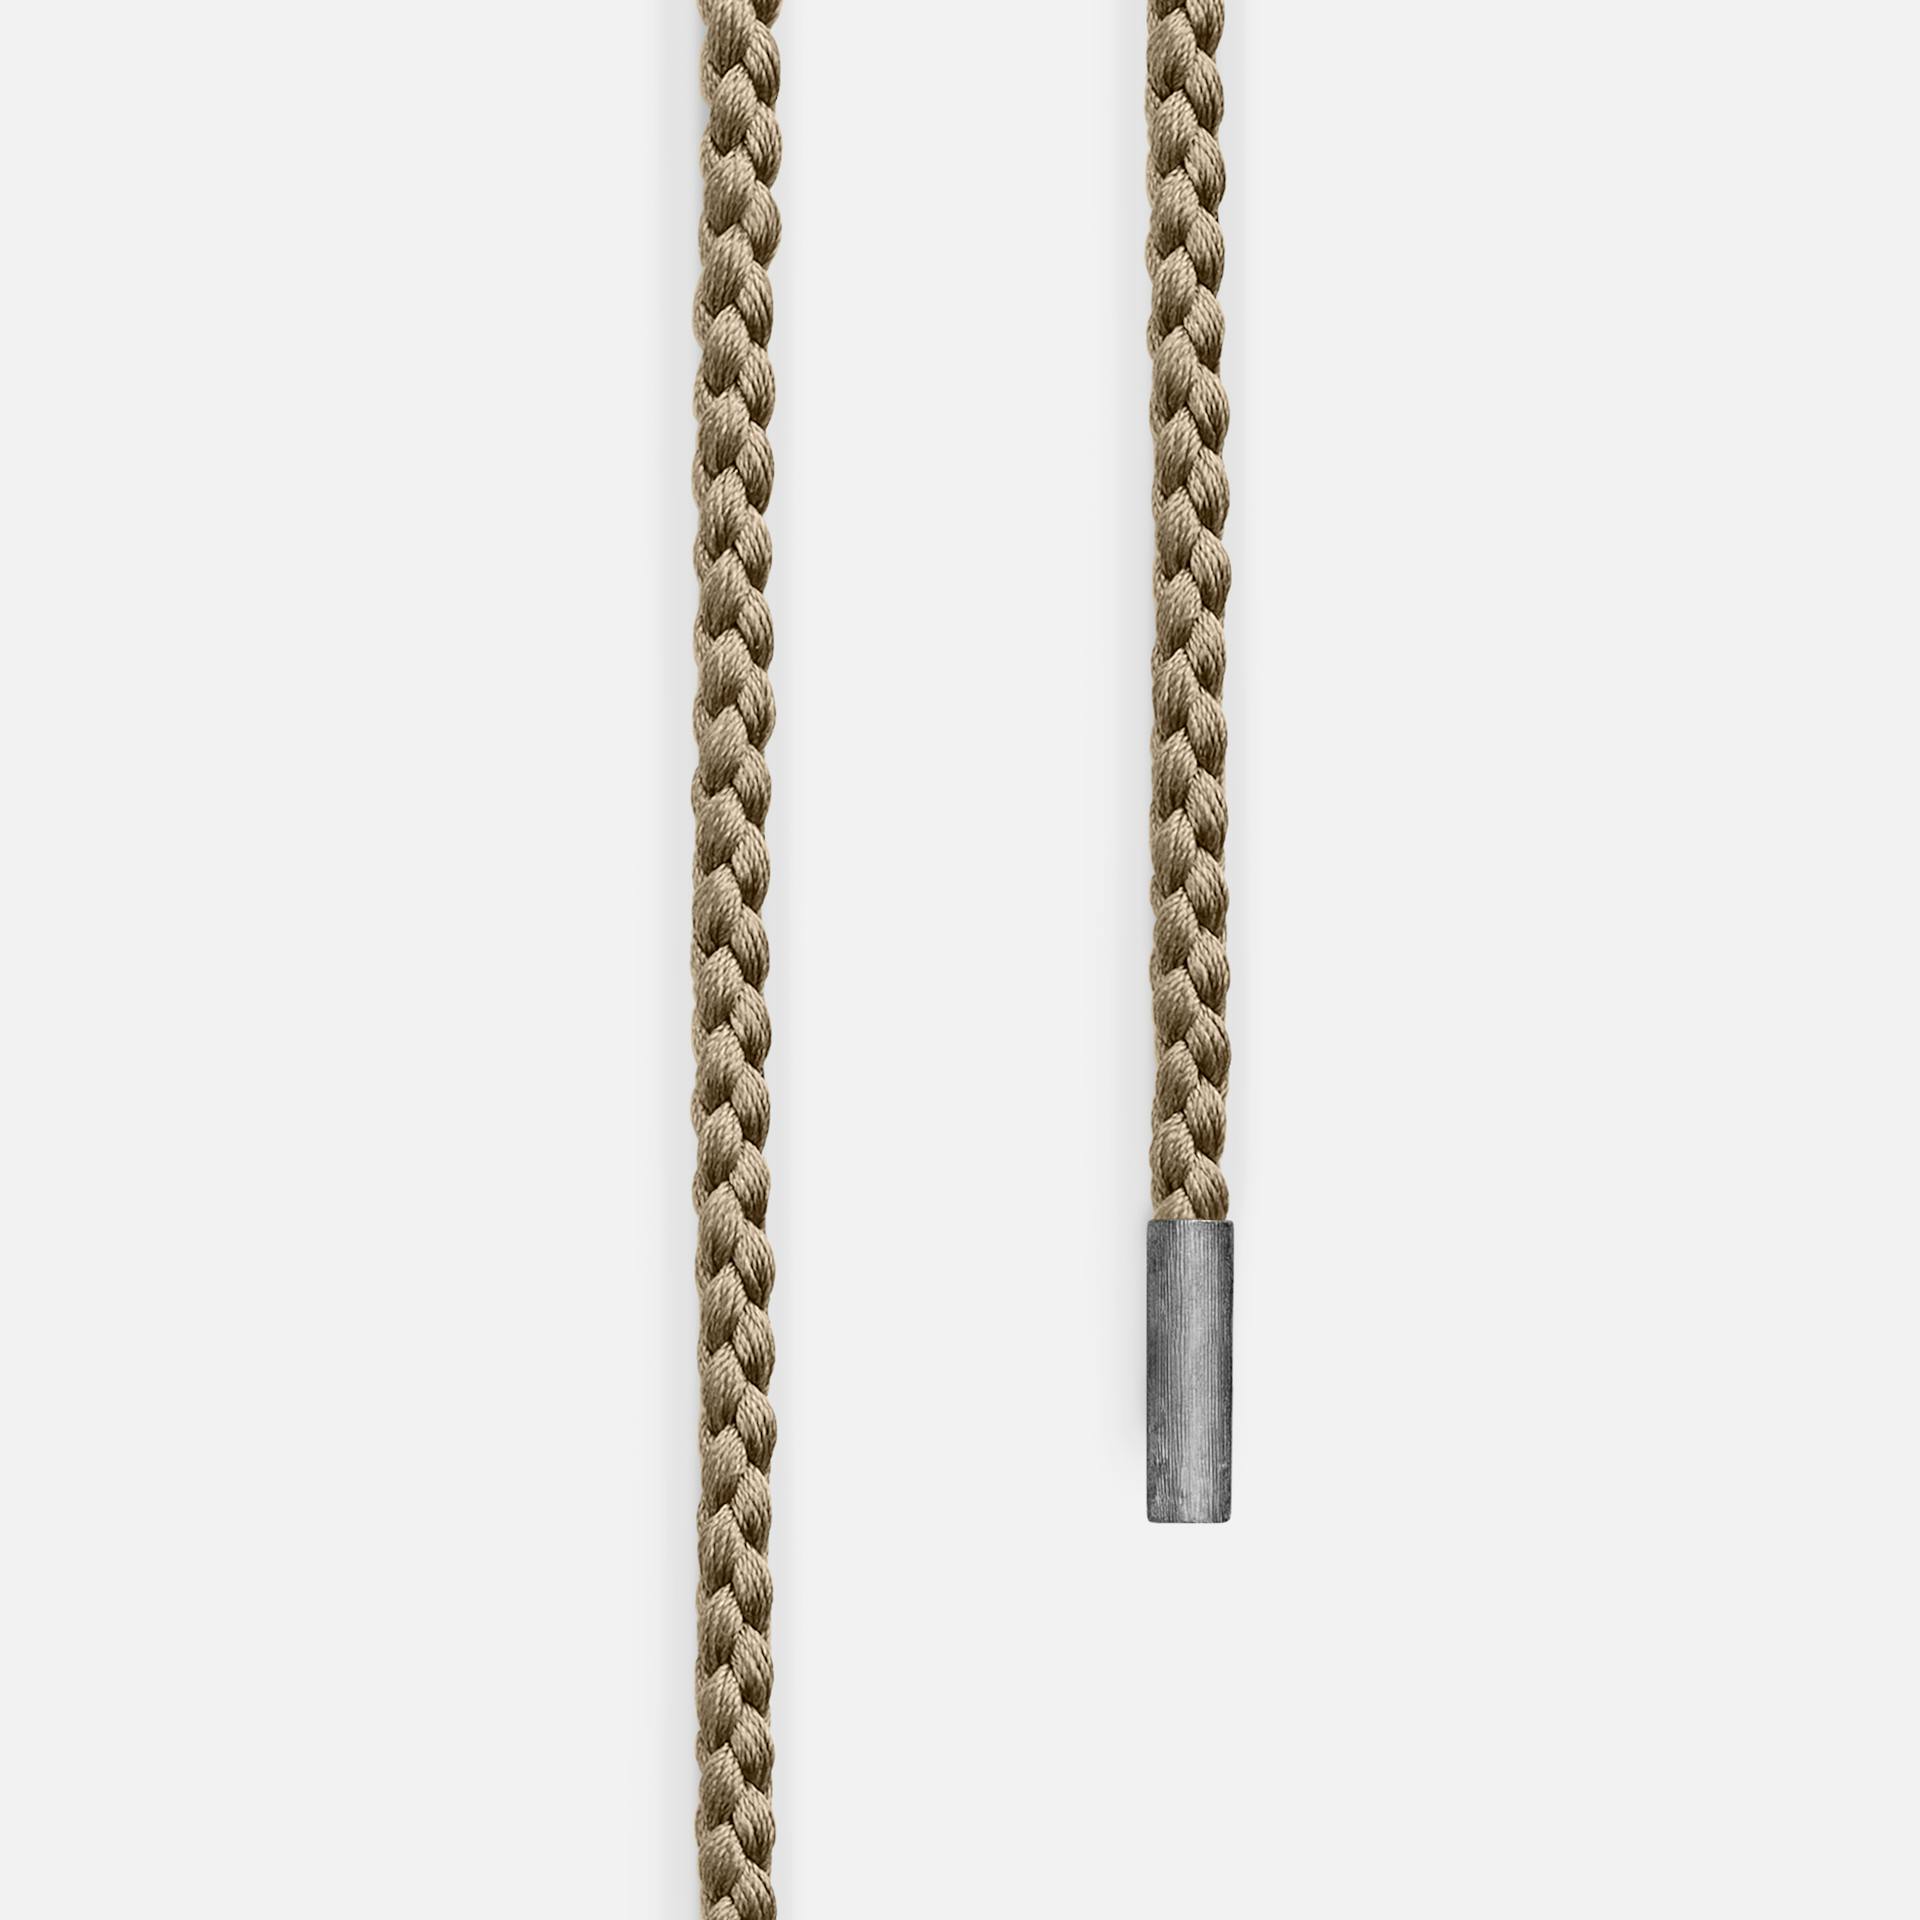 Mokuba Silk String Necklace with Oxidized Sterling Silver End Pieces  |  Ole Lynggaard Copenhagen    